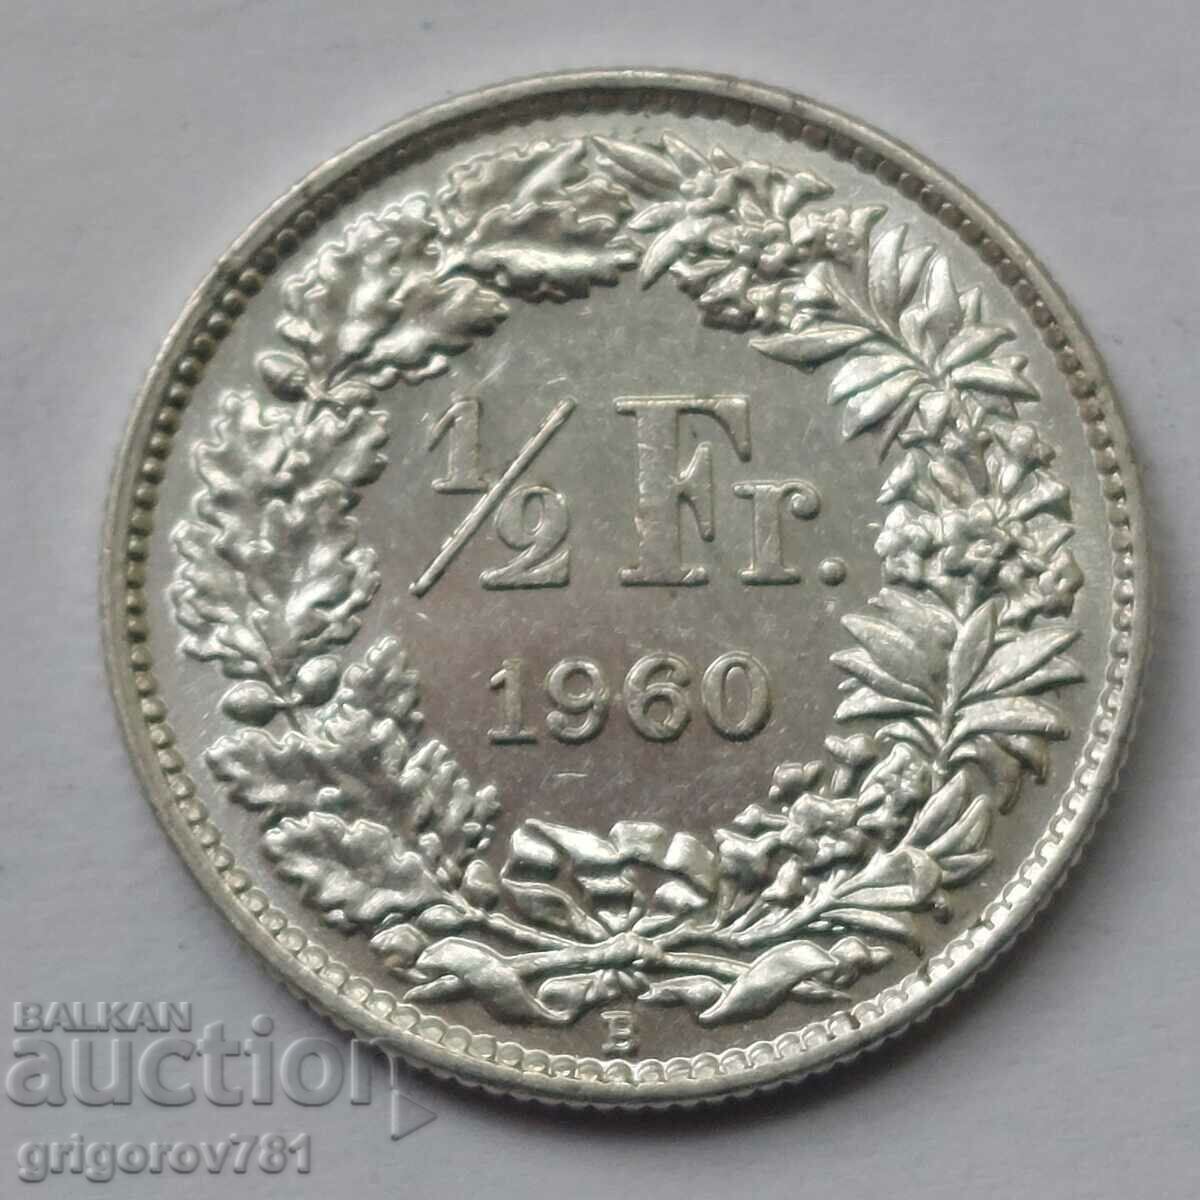 1/2 Franc Silver Switzerland 1960 B - Silver Coin #140